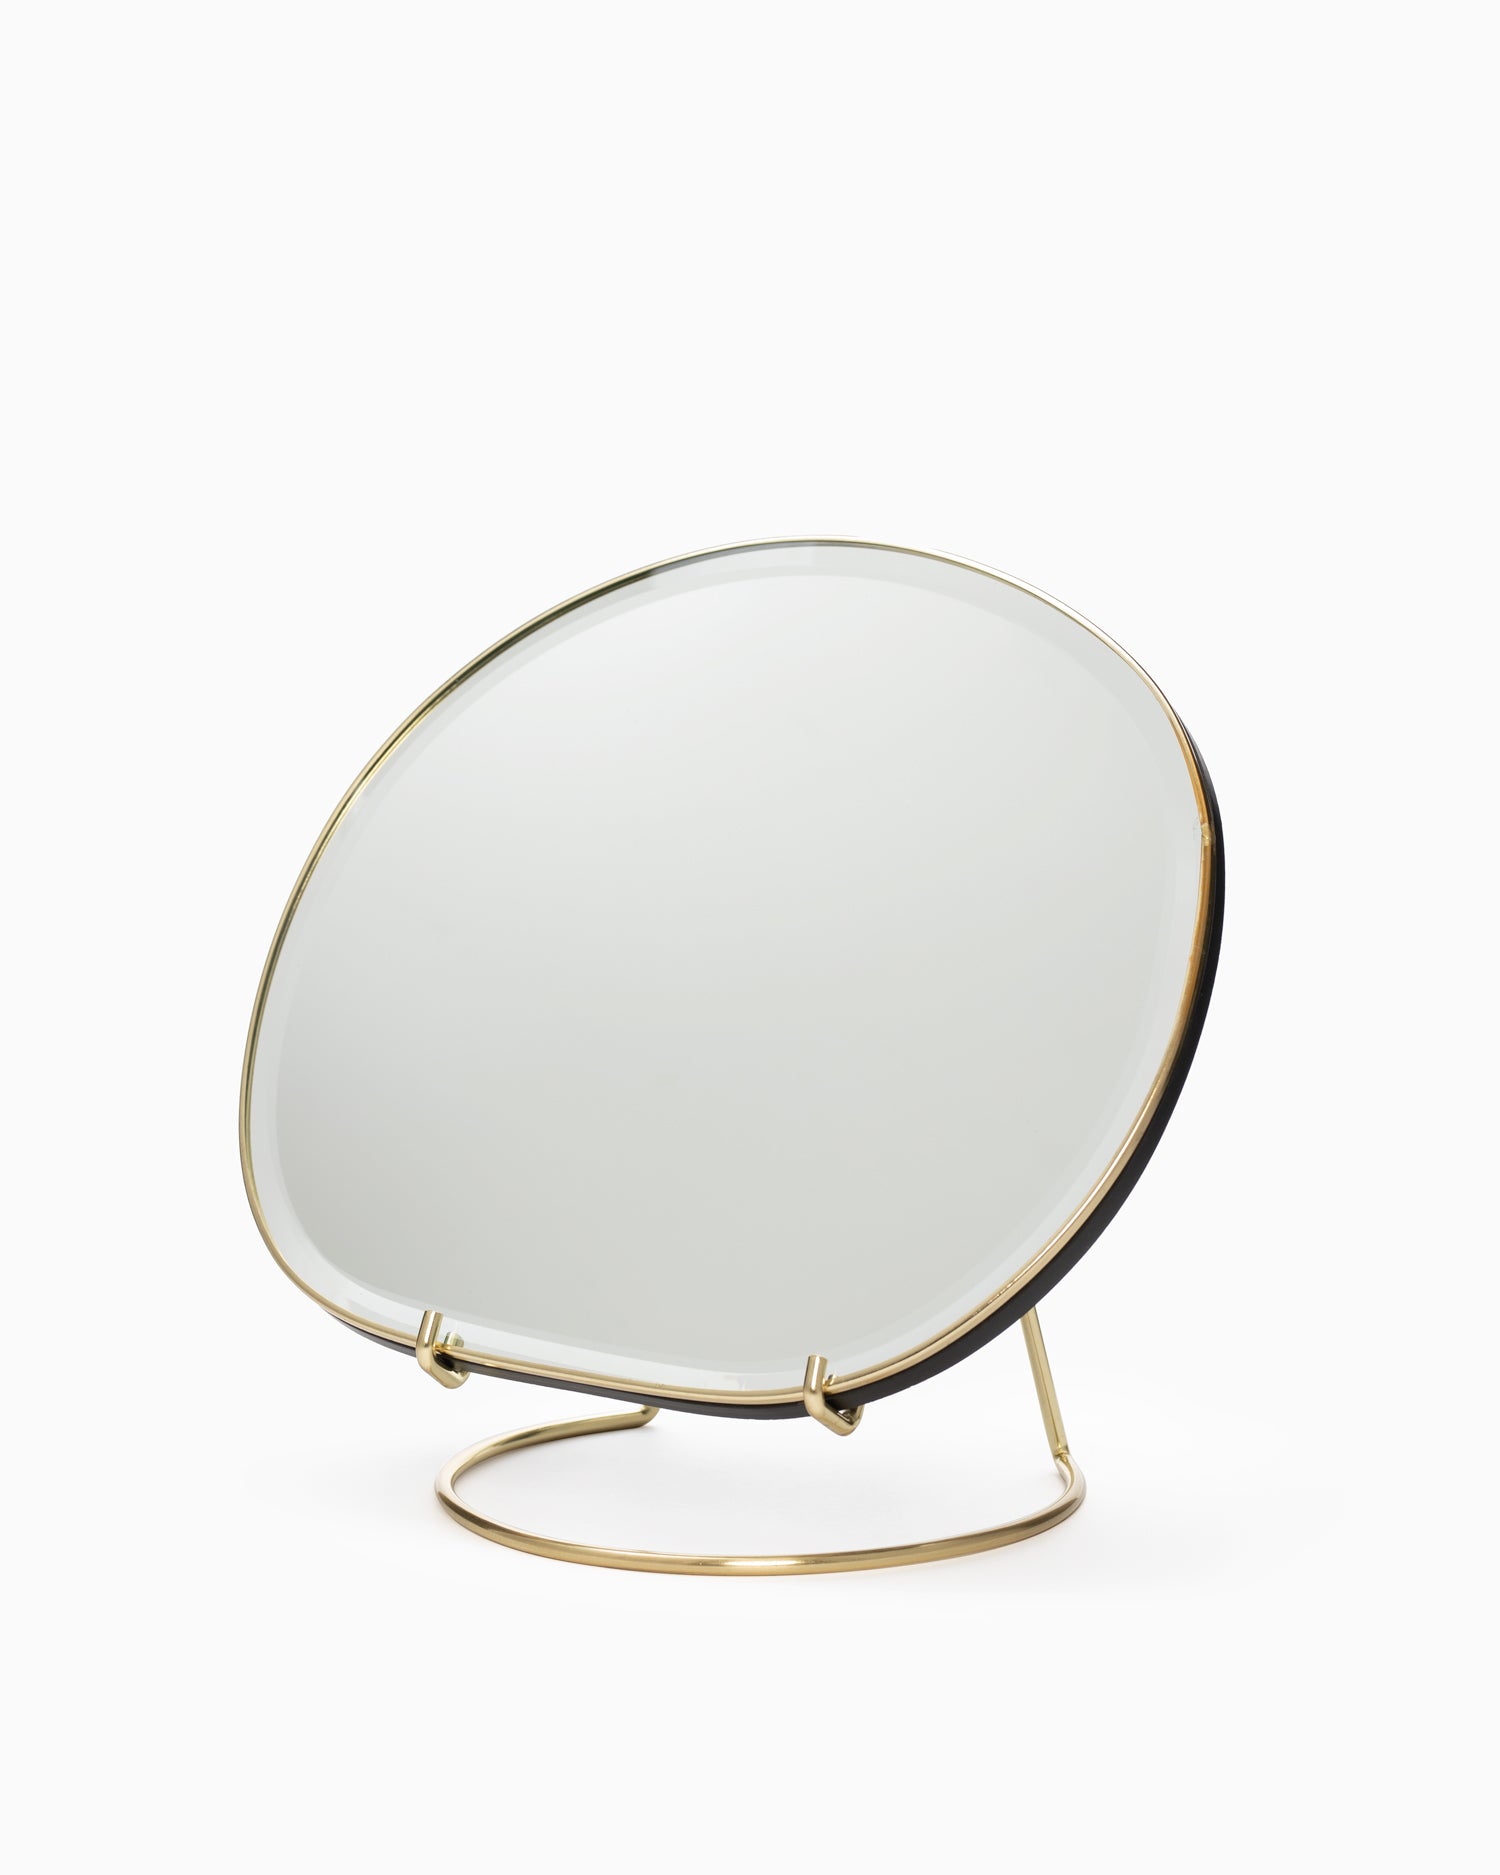 Pond Table Mirror - Brass